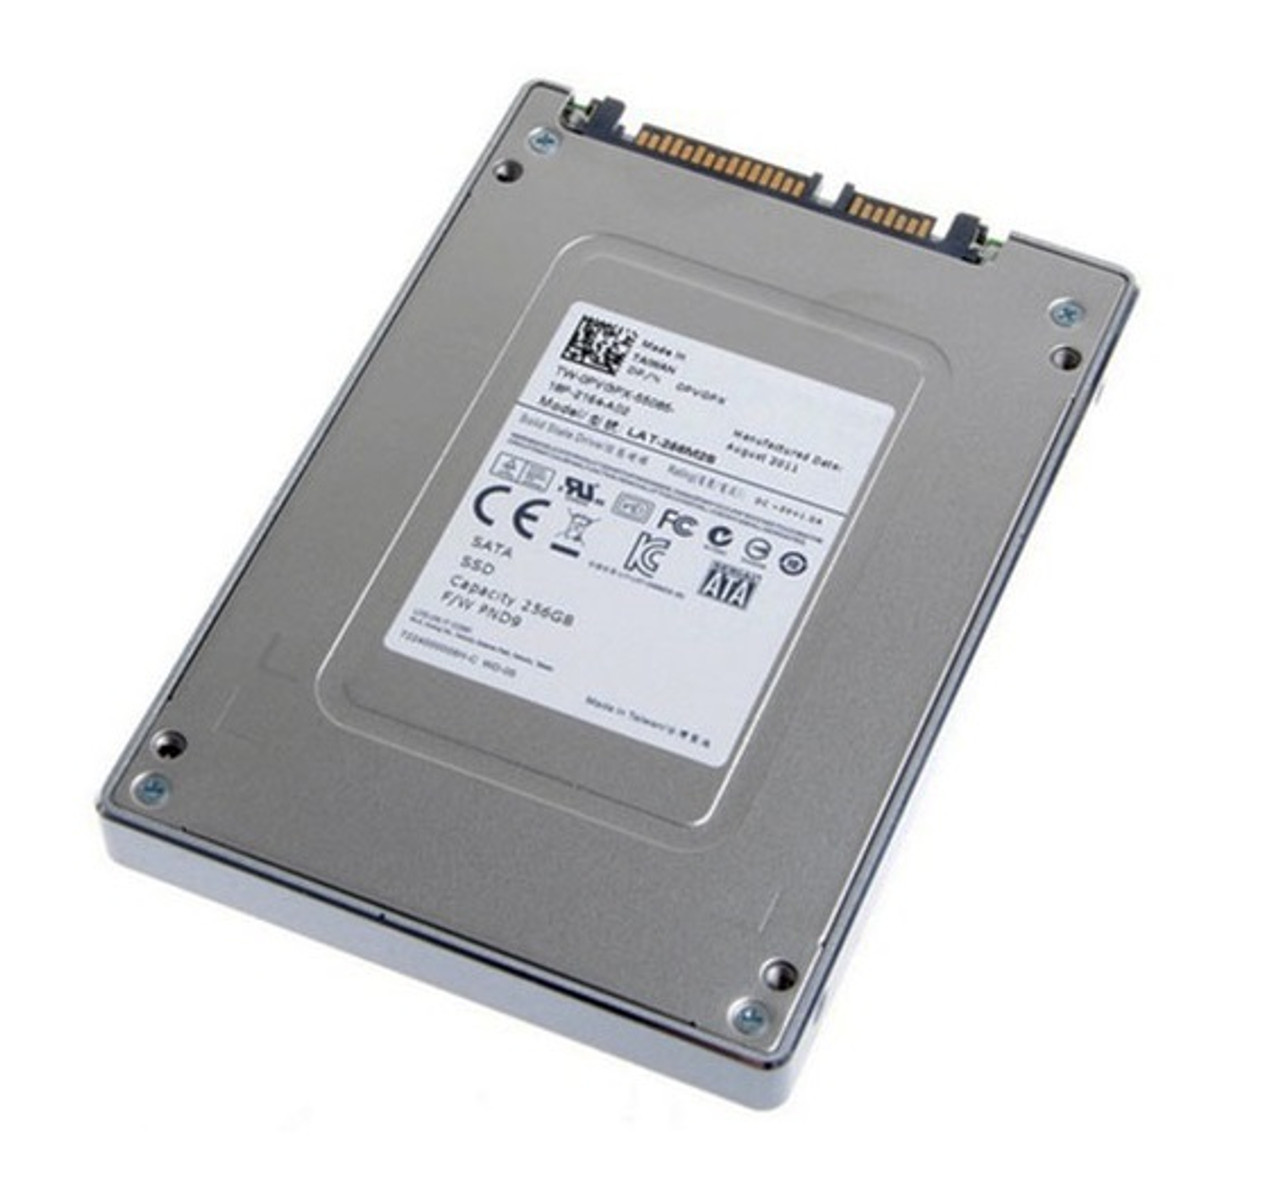 EMC51-01825-652U - EMC 200GB Fibre Channel 4Gb/s LFF Solid State Drive